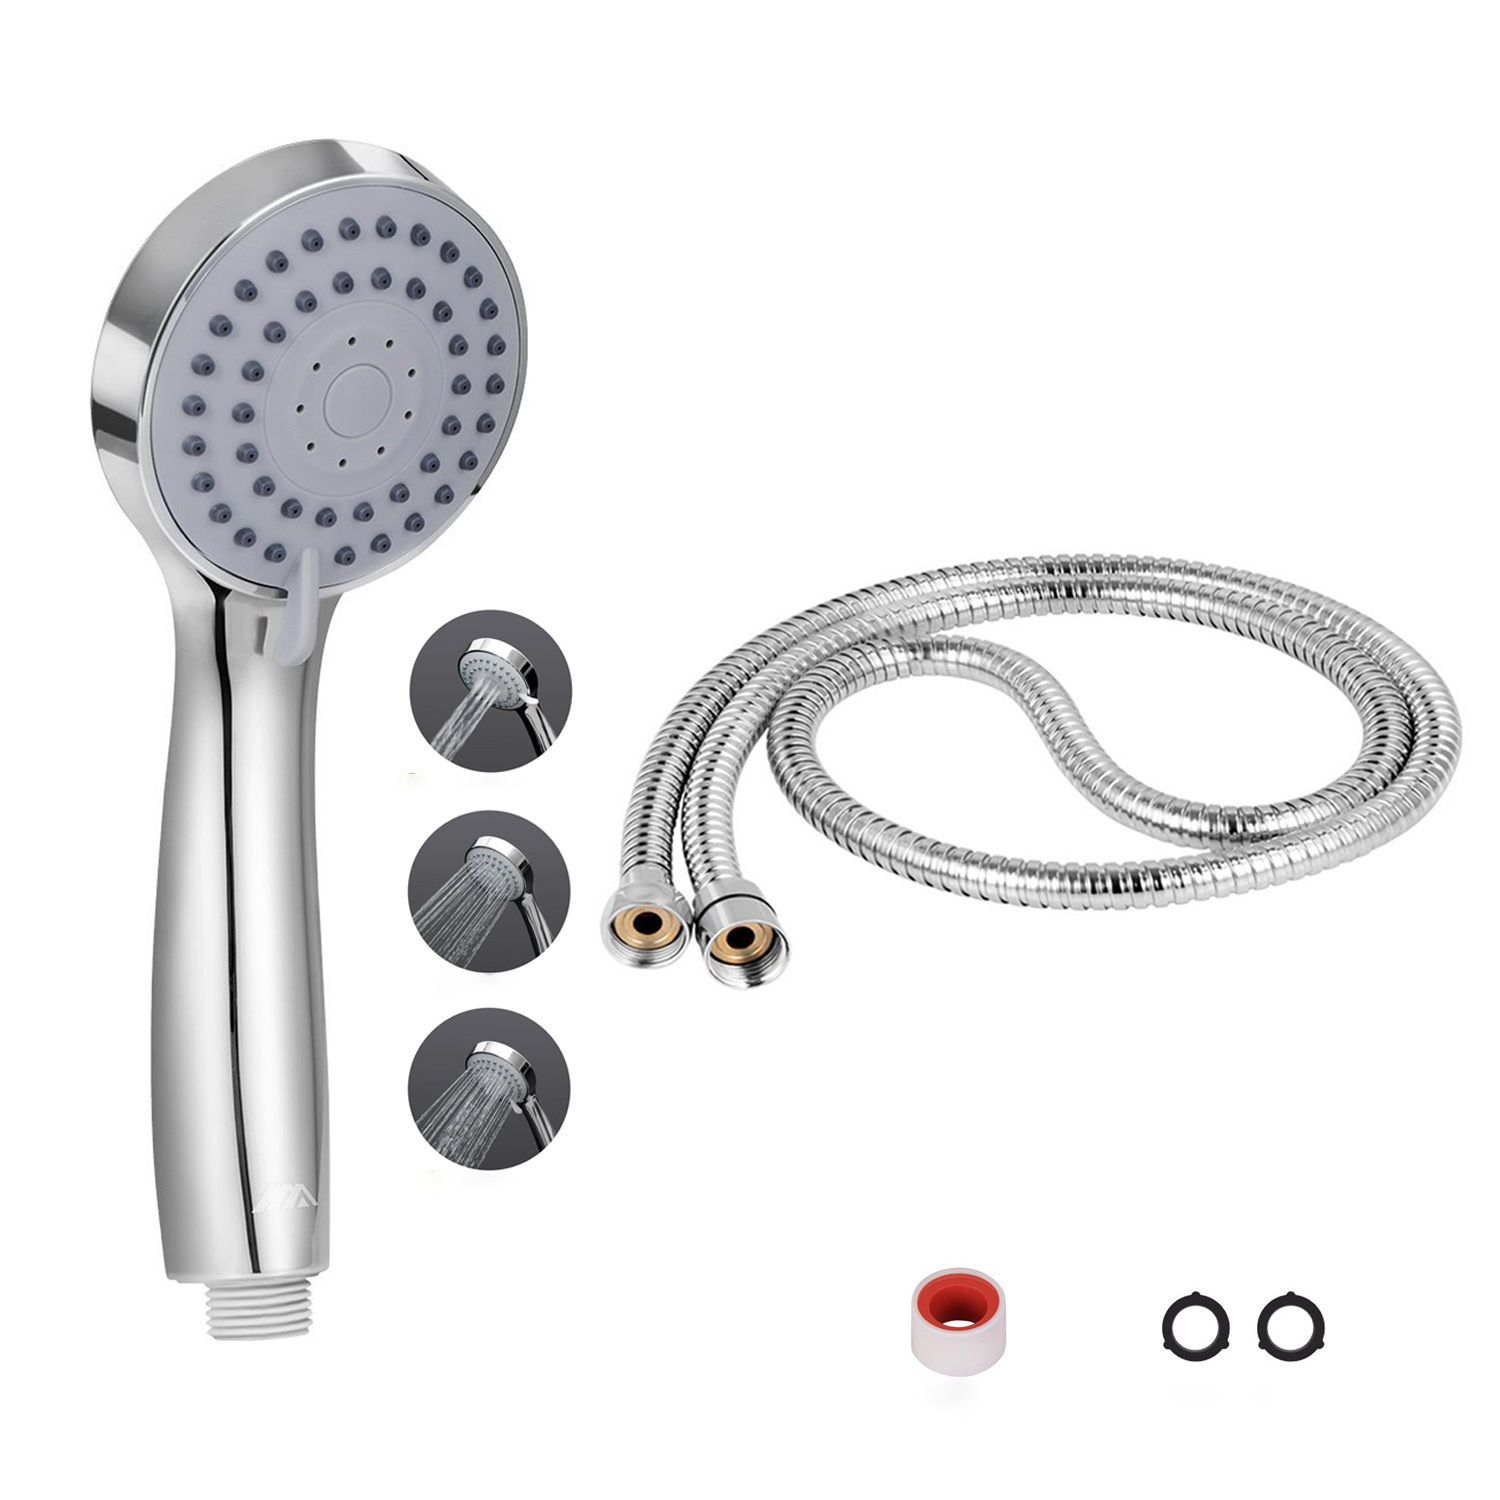 FM_ FJ EE_ Handheld High Pressure Water-saving Bathroom Shower Heads Nozzle Spr 